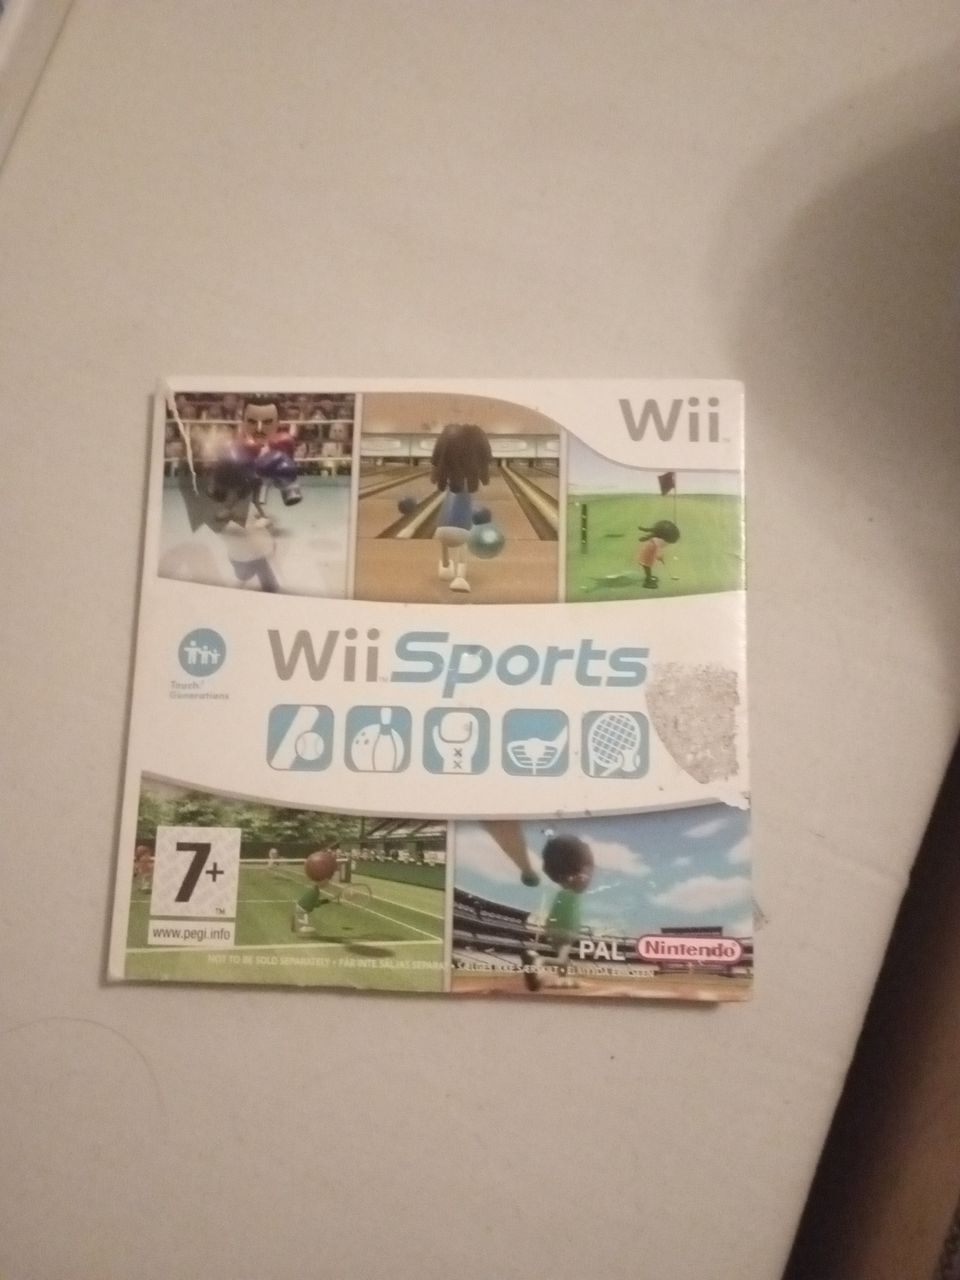 Wii sports